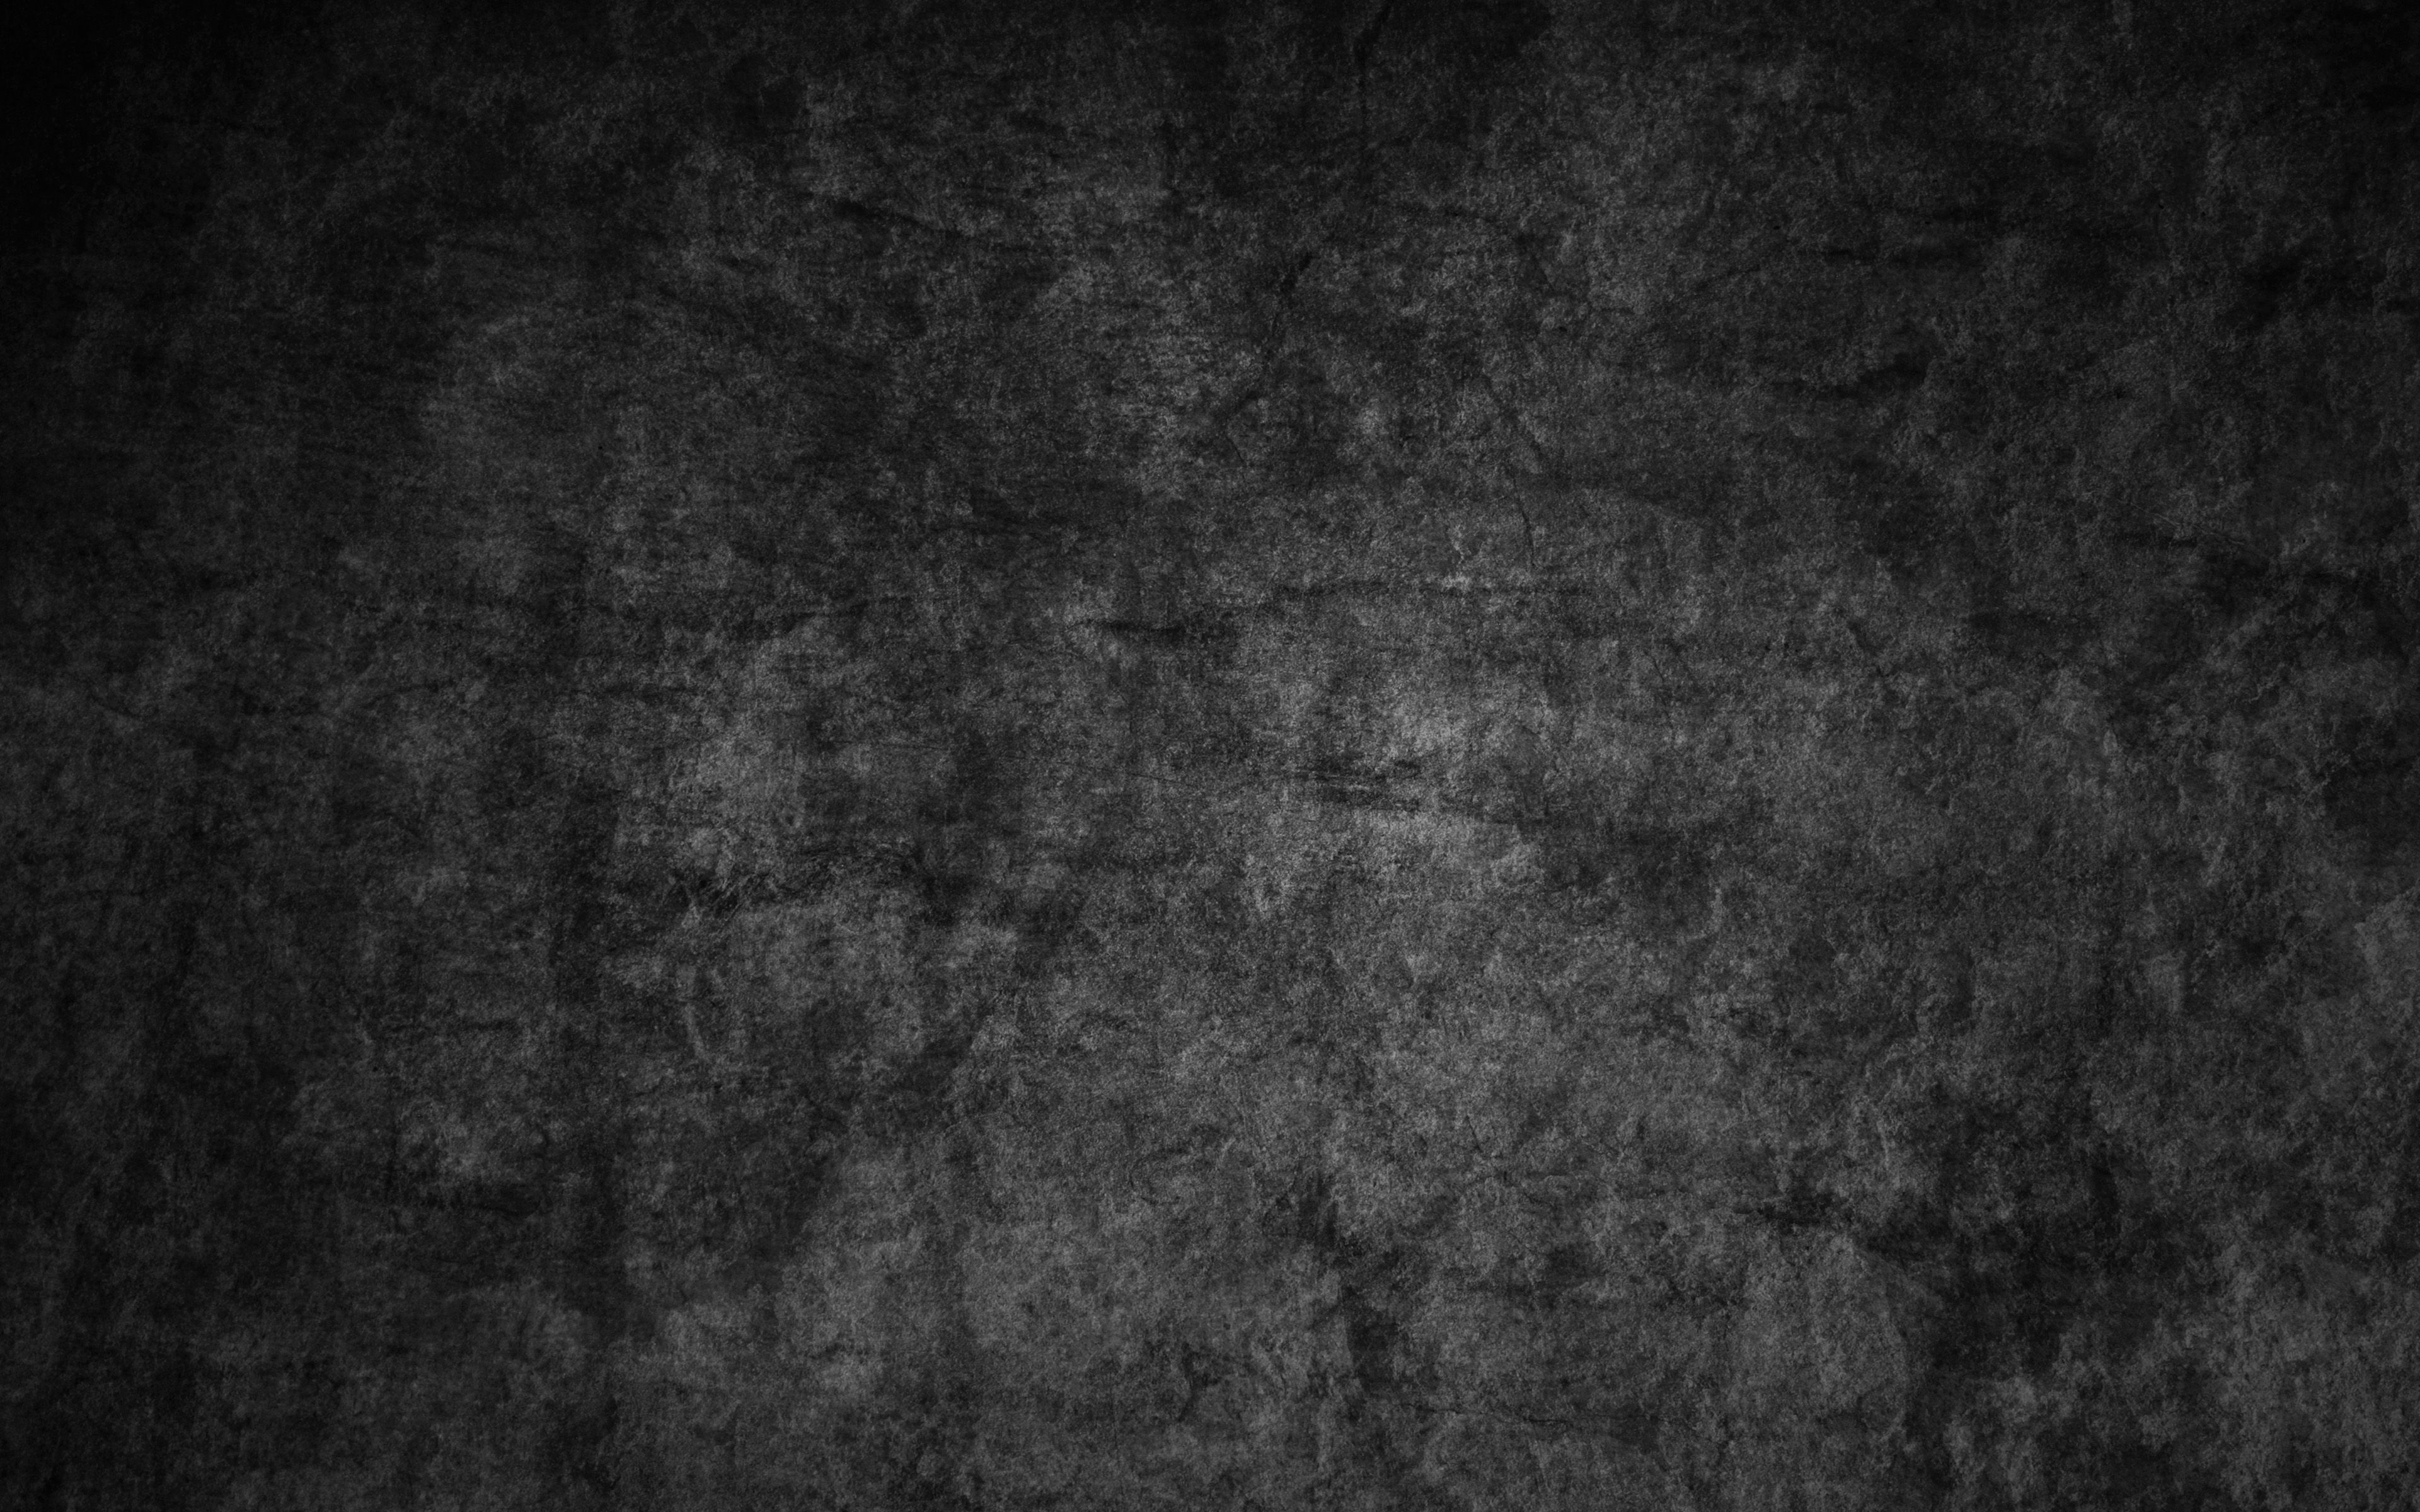  4k  Black Grunge  Wallpapers Wallpaper Cave